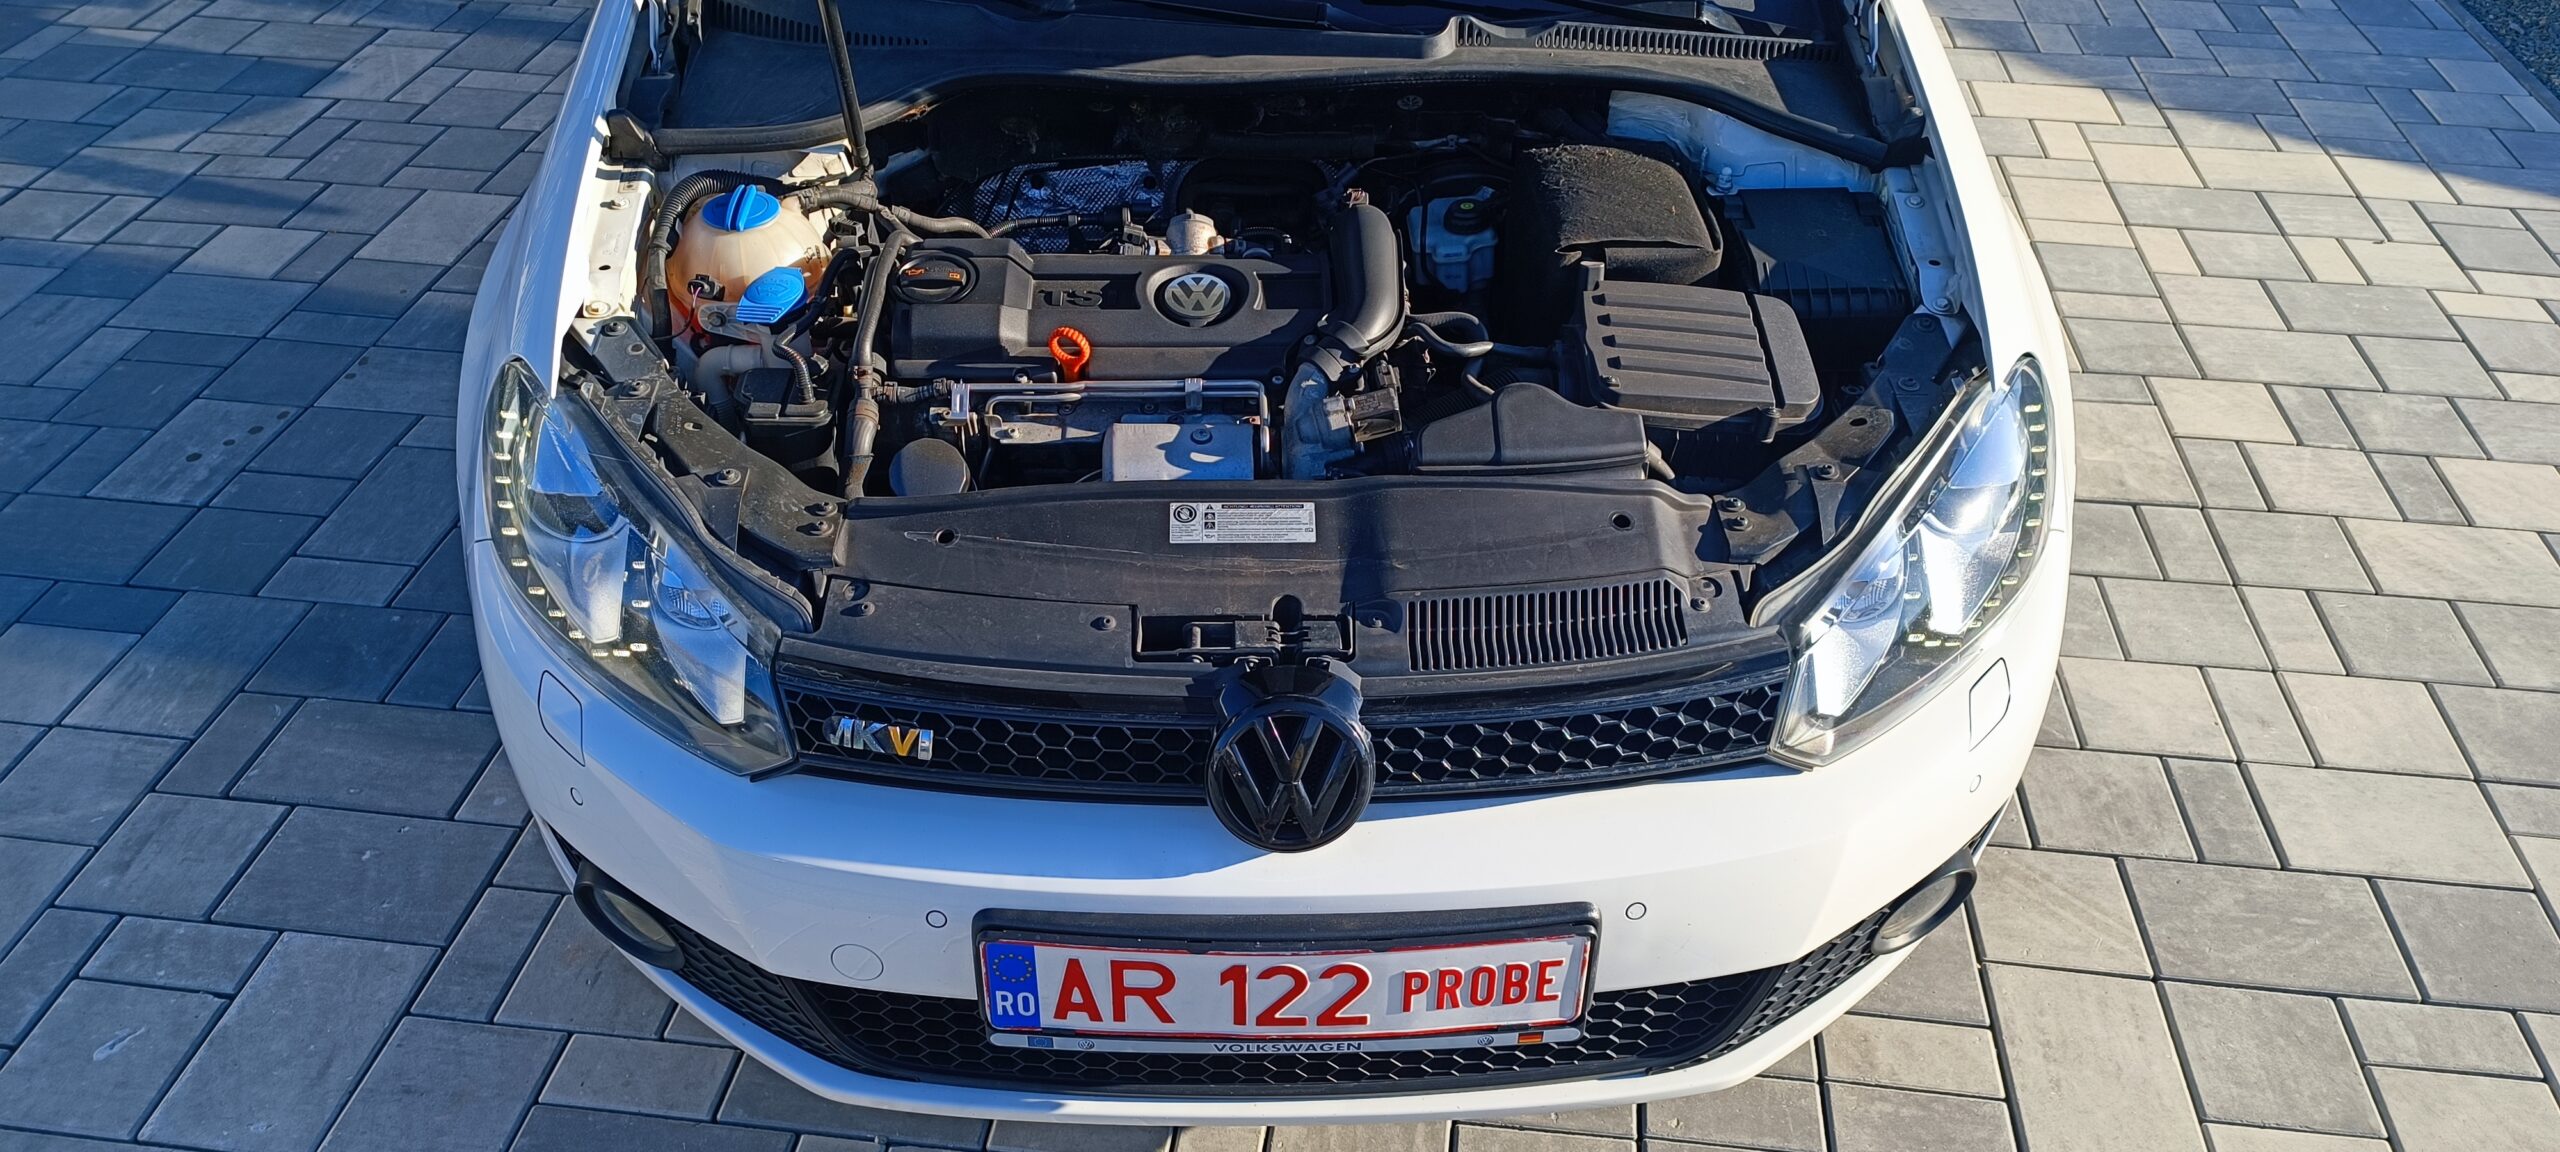 VW GOLF 6,1.4 BENZINA, CUTIE AUTOMATA DSG, EURO 5